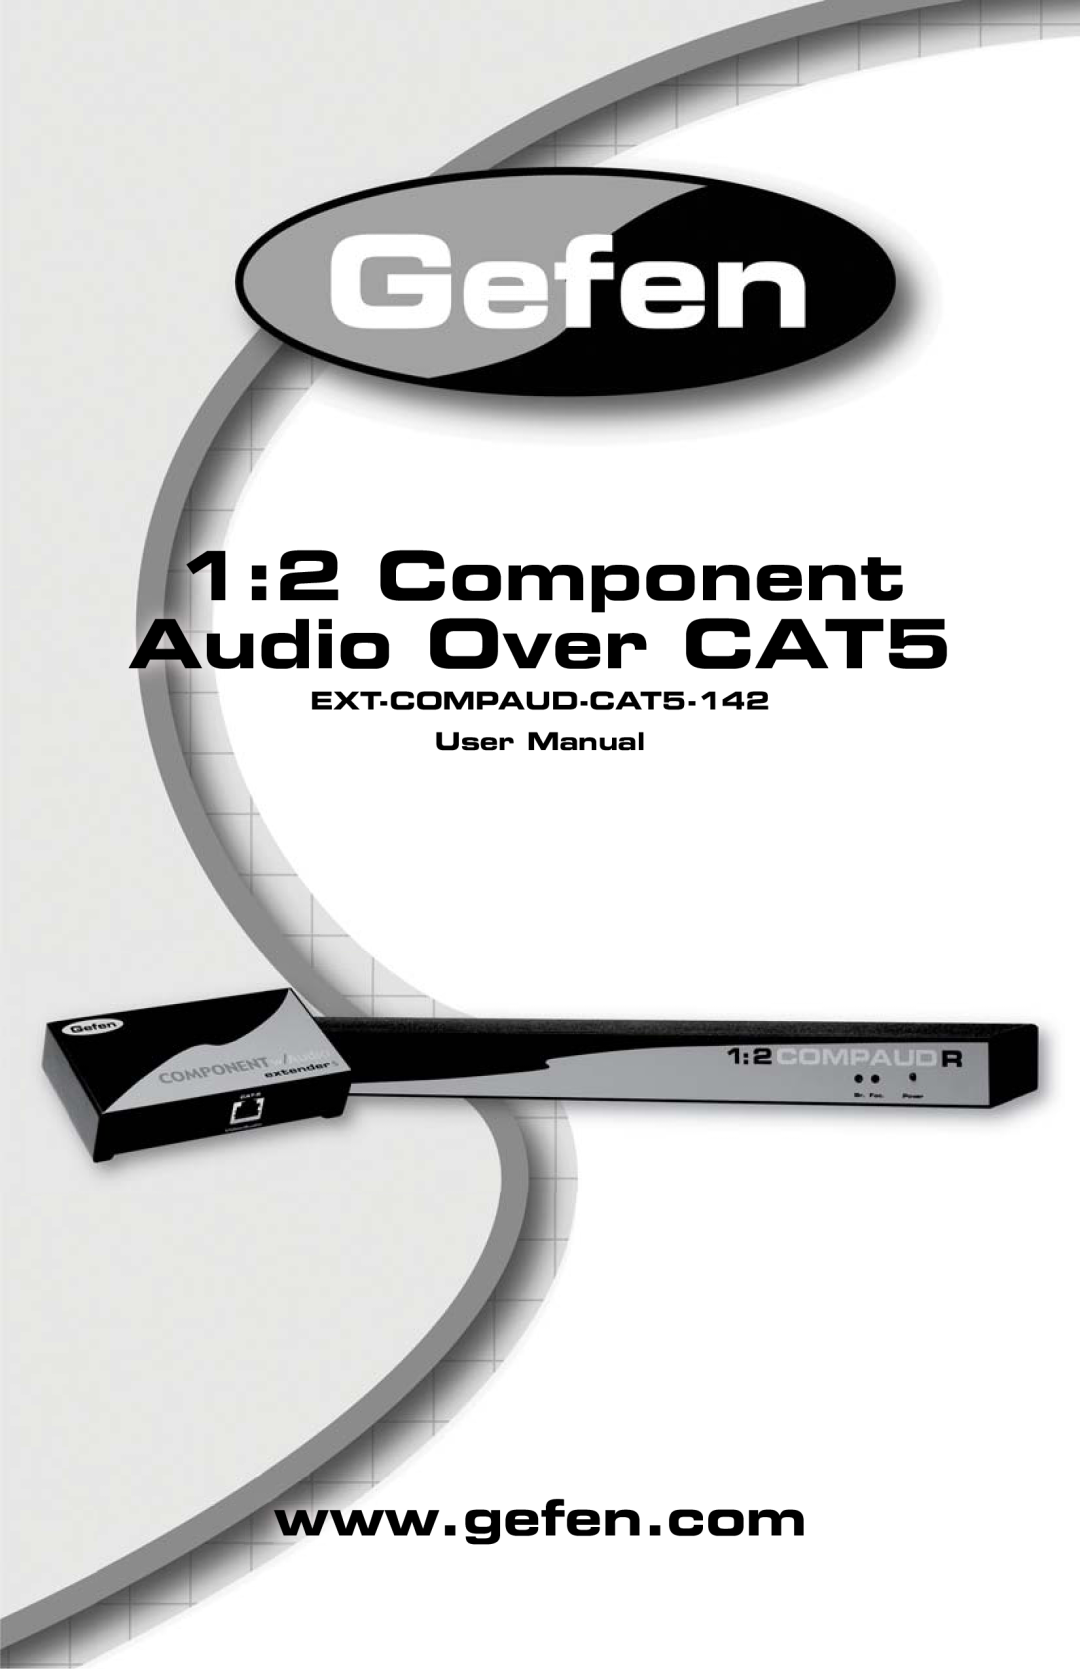 Gefen EXT-COMPAUD-CAT5-142 user manual 1 2 Component Audio Over CAT5 